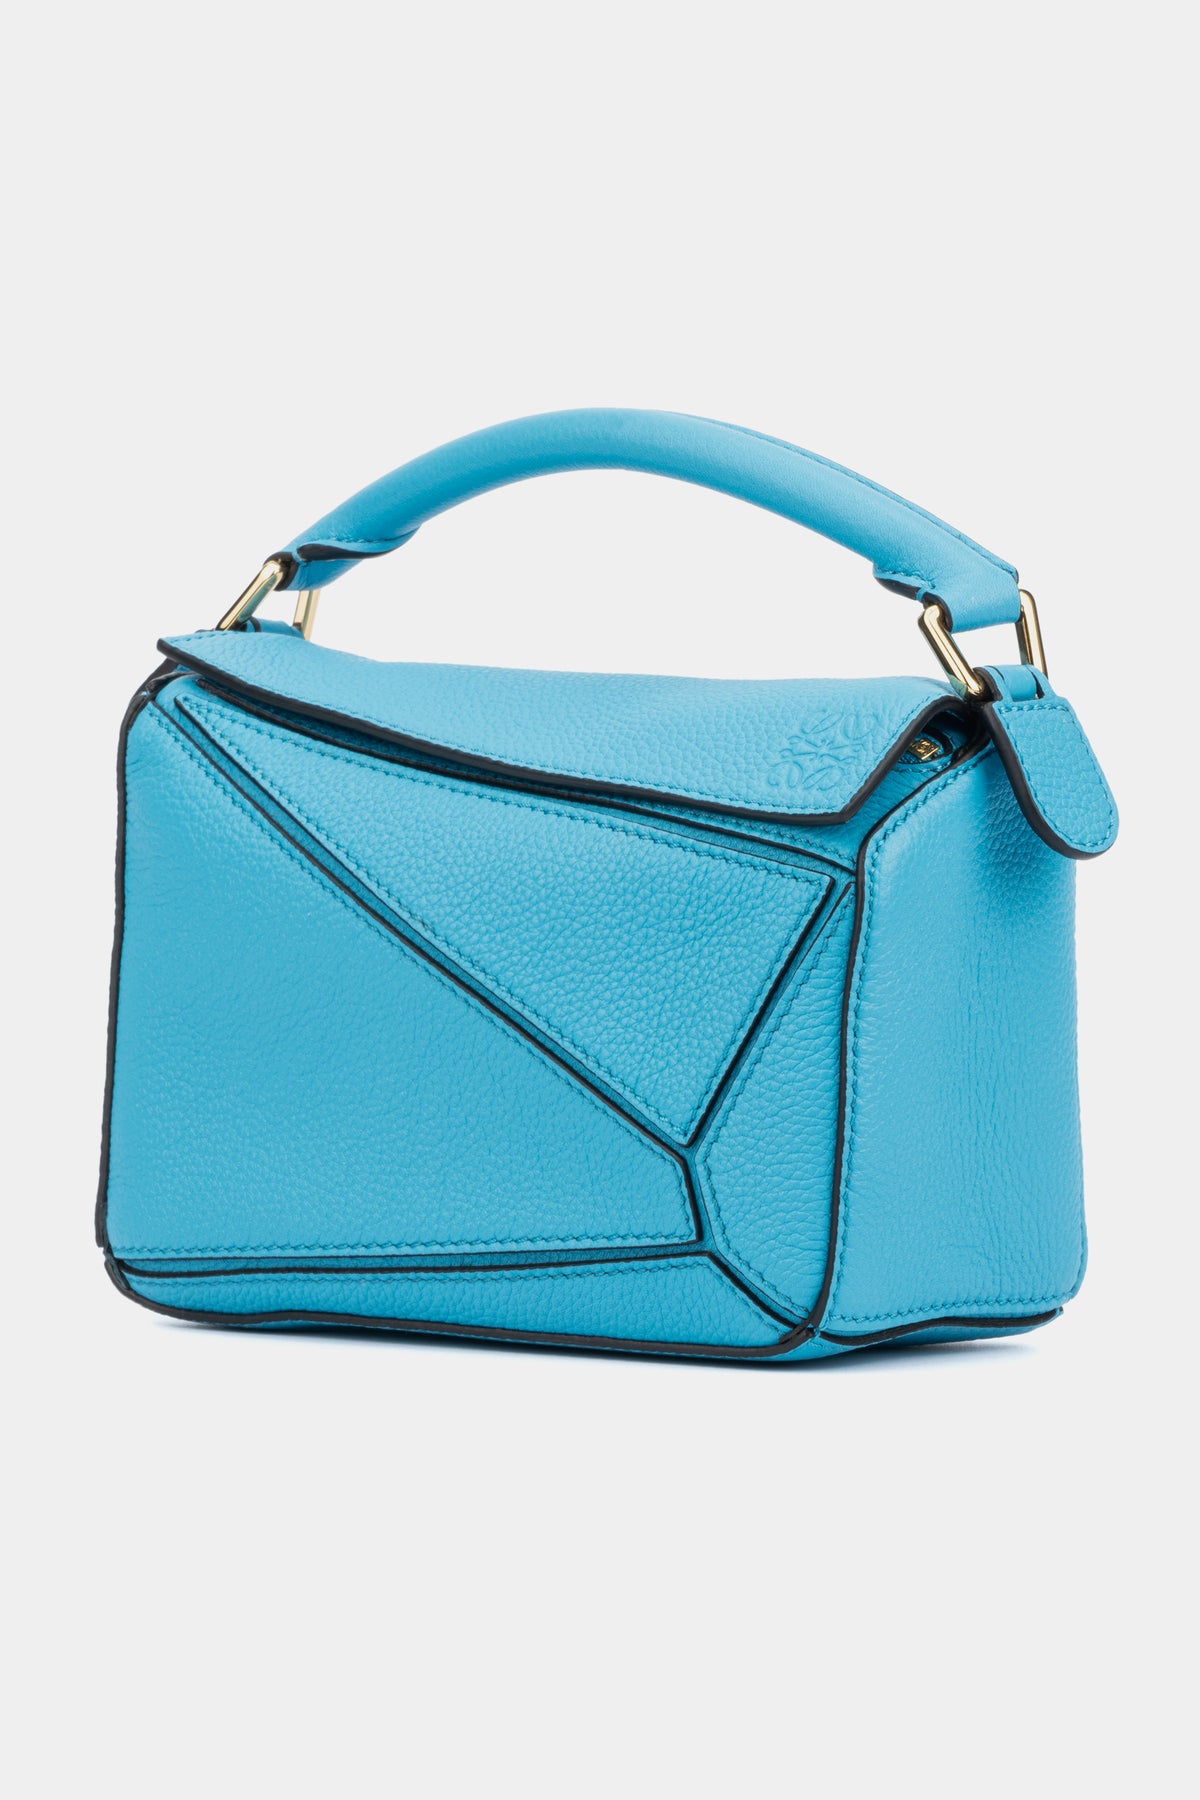 Loewe Mini Puzzle Color : r/handbags